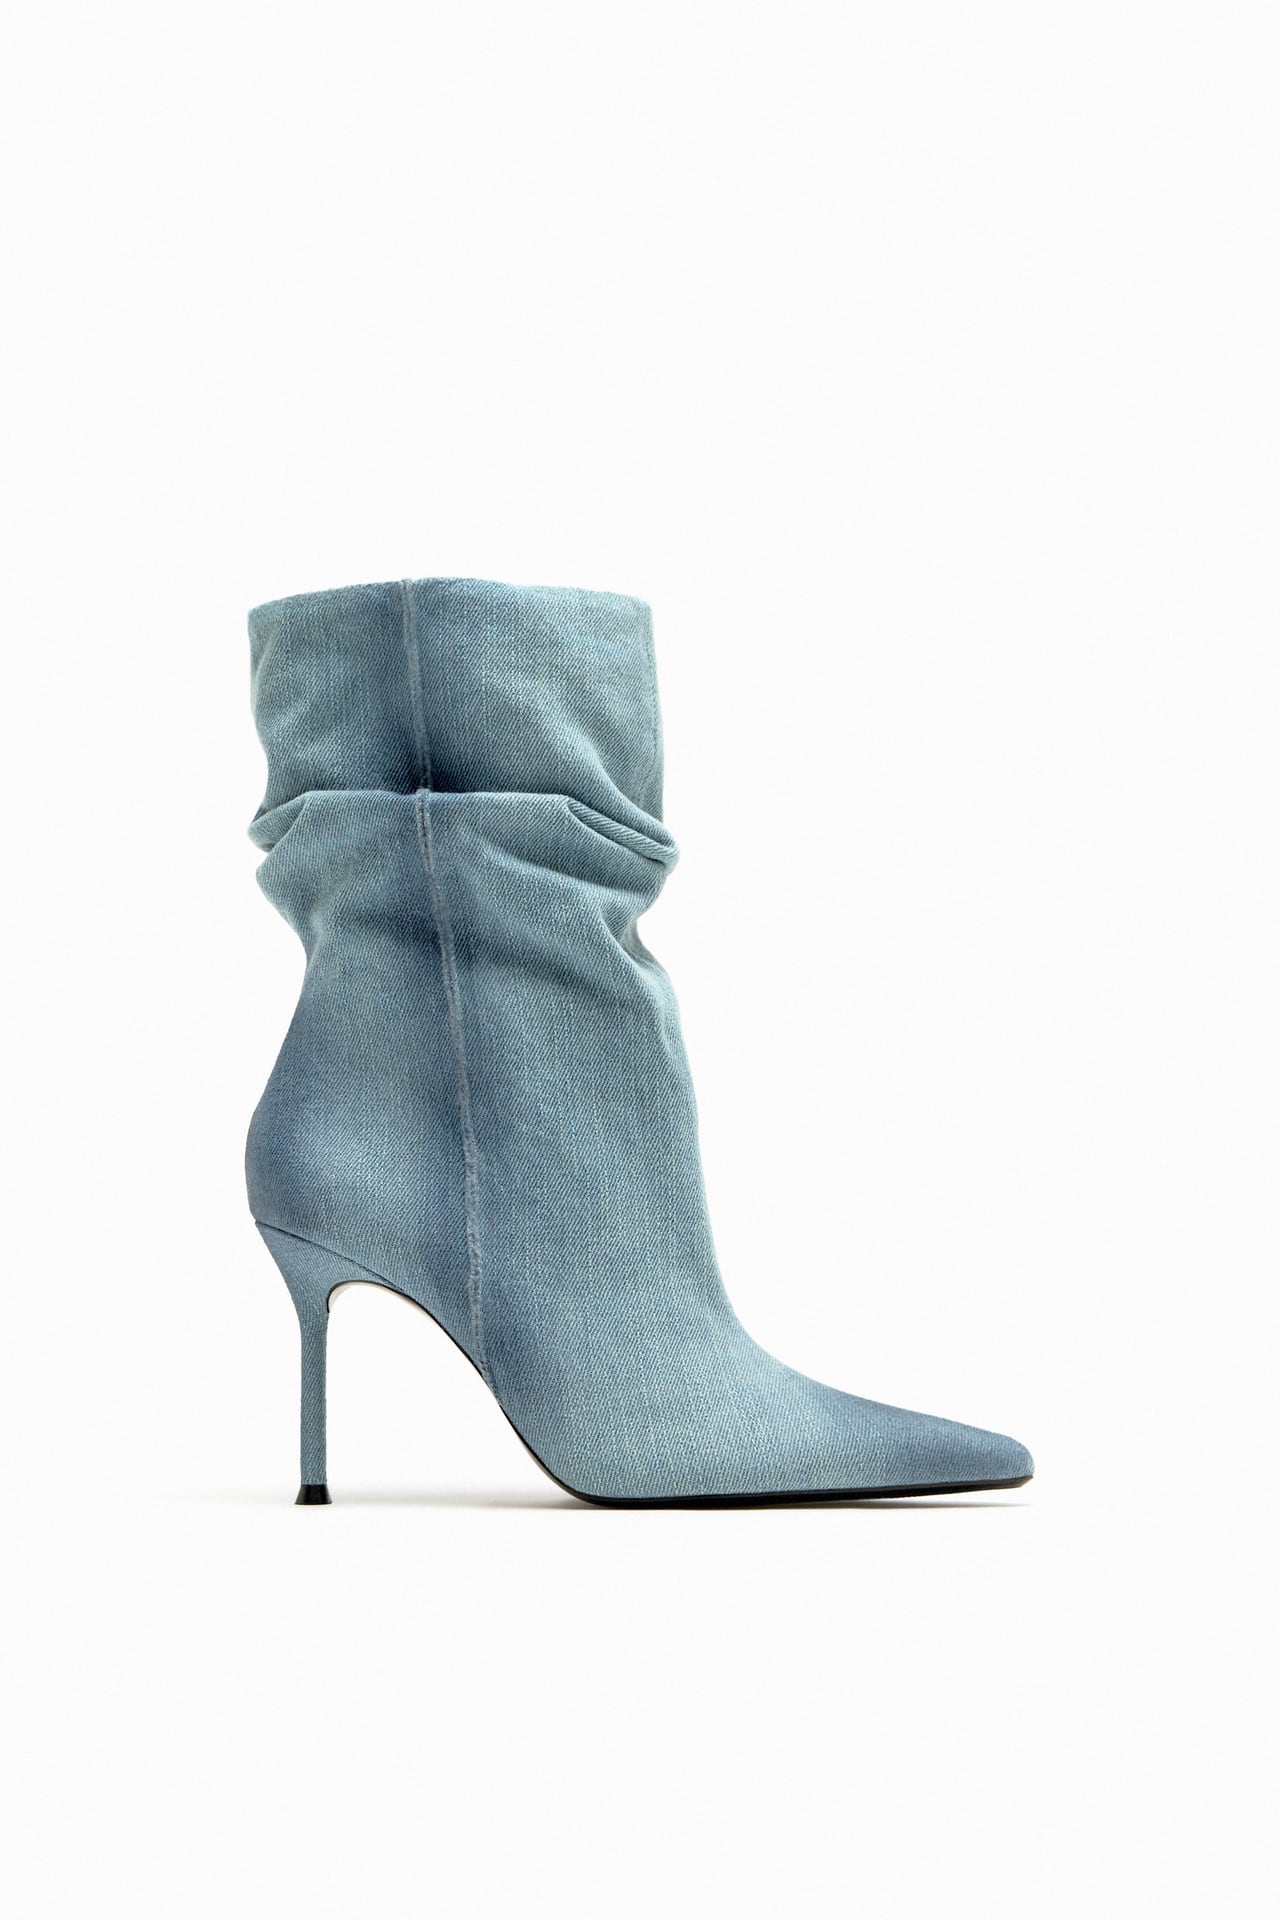 Zara Mid-calf denim ankle boots
